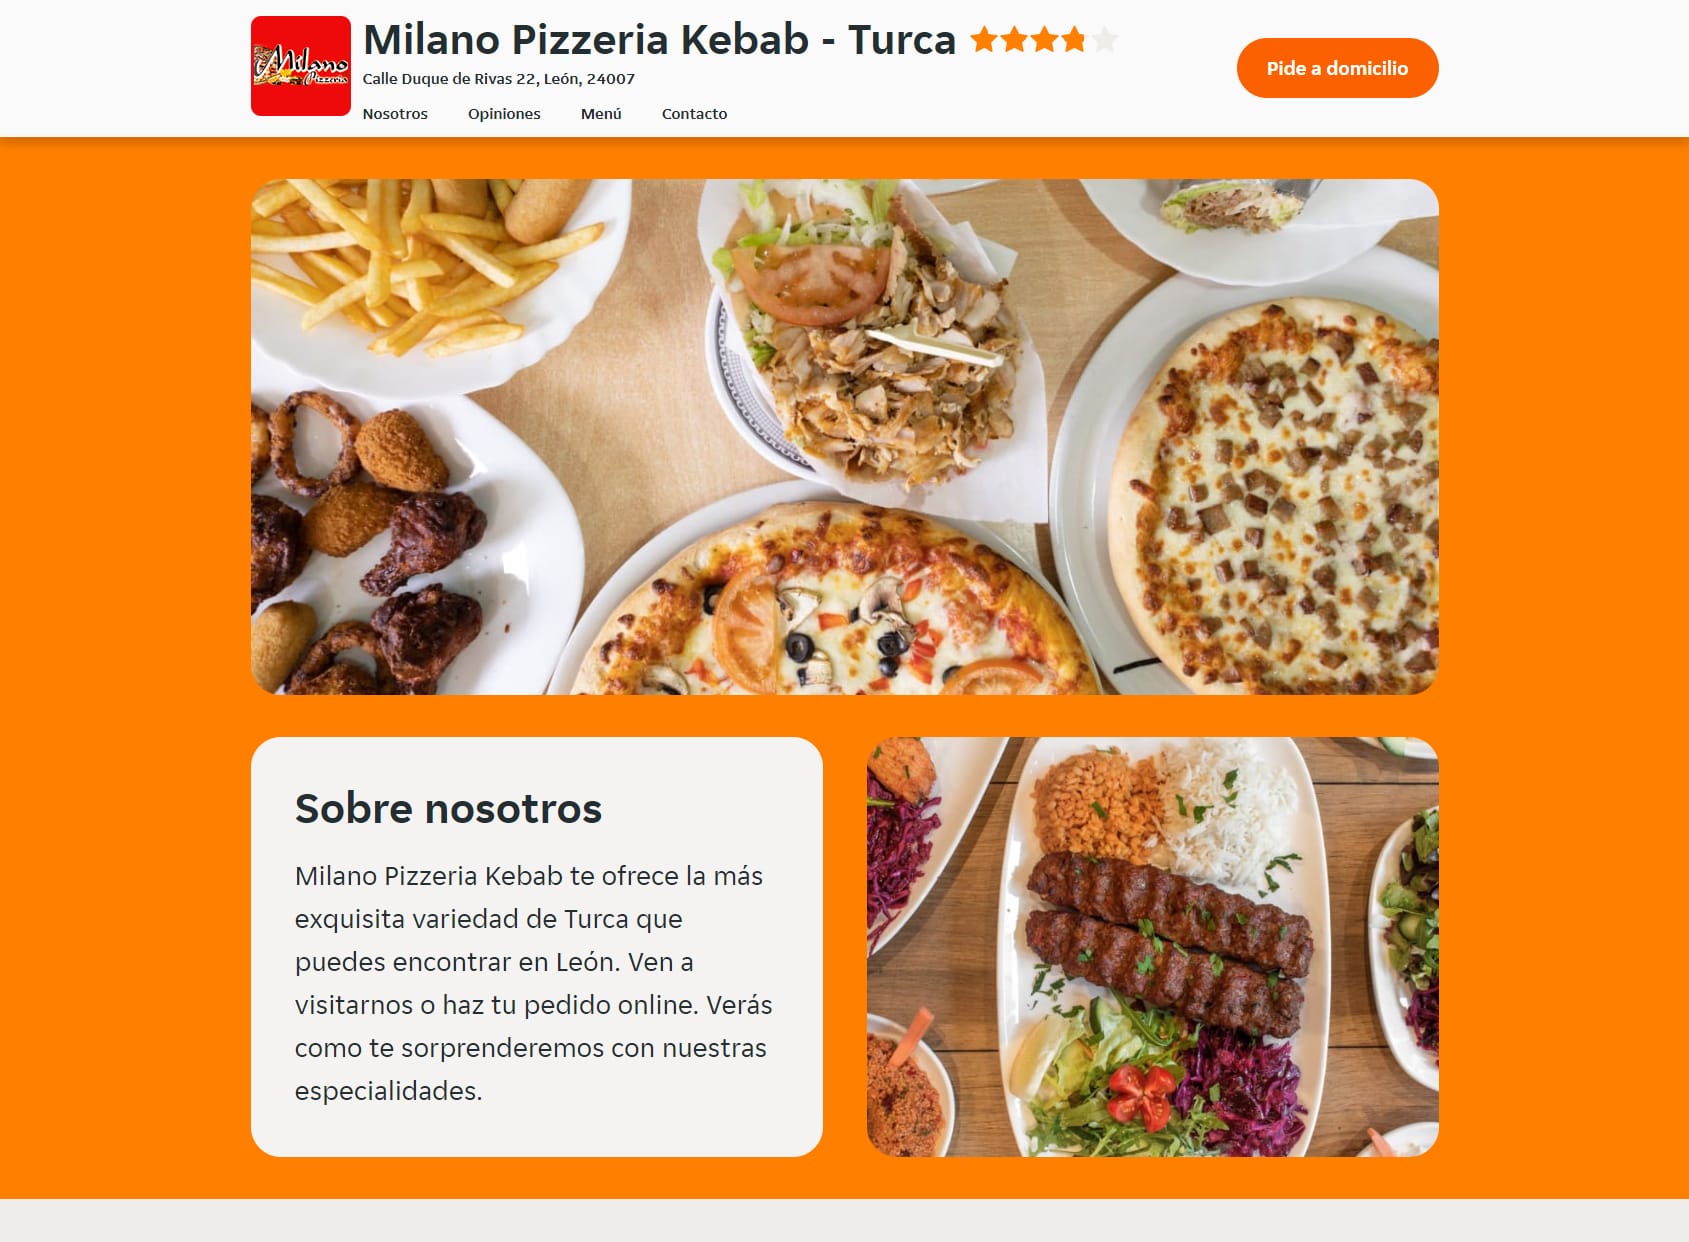 Milano Pizzeria Kebab